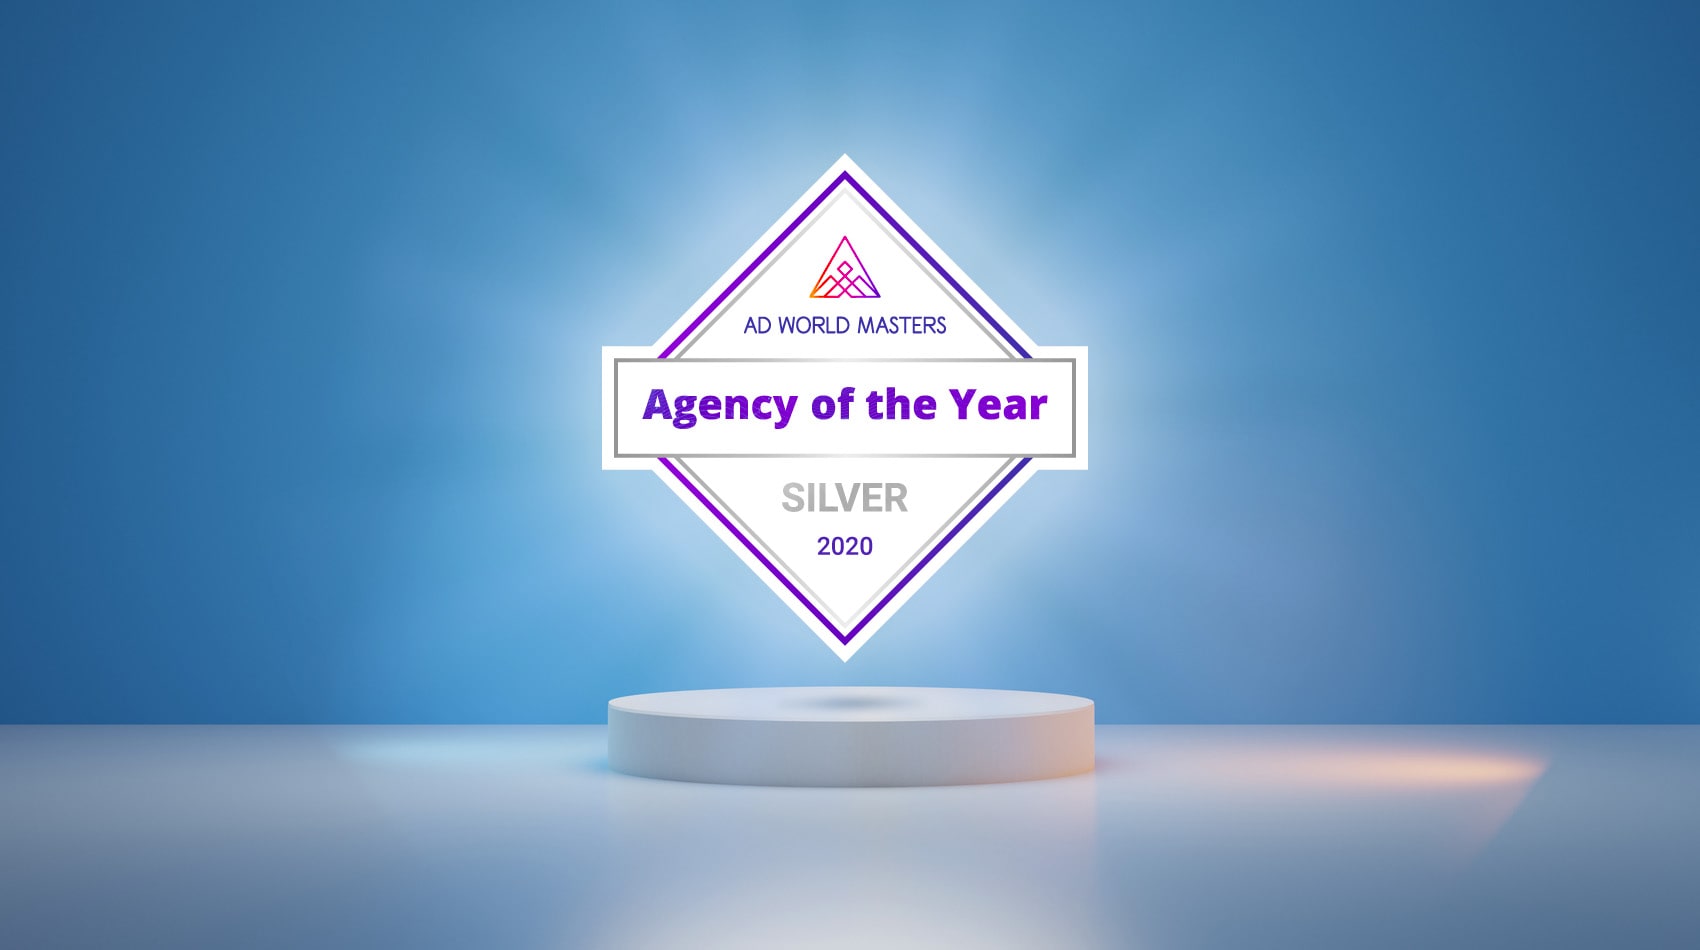 Ad World Masters' Agency of the Year Award